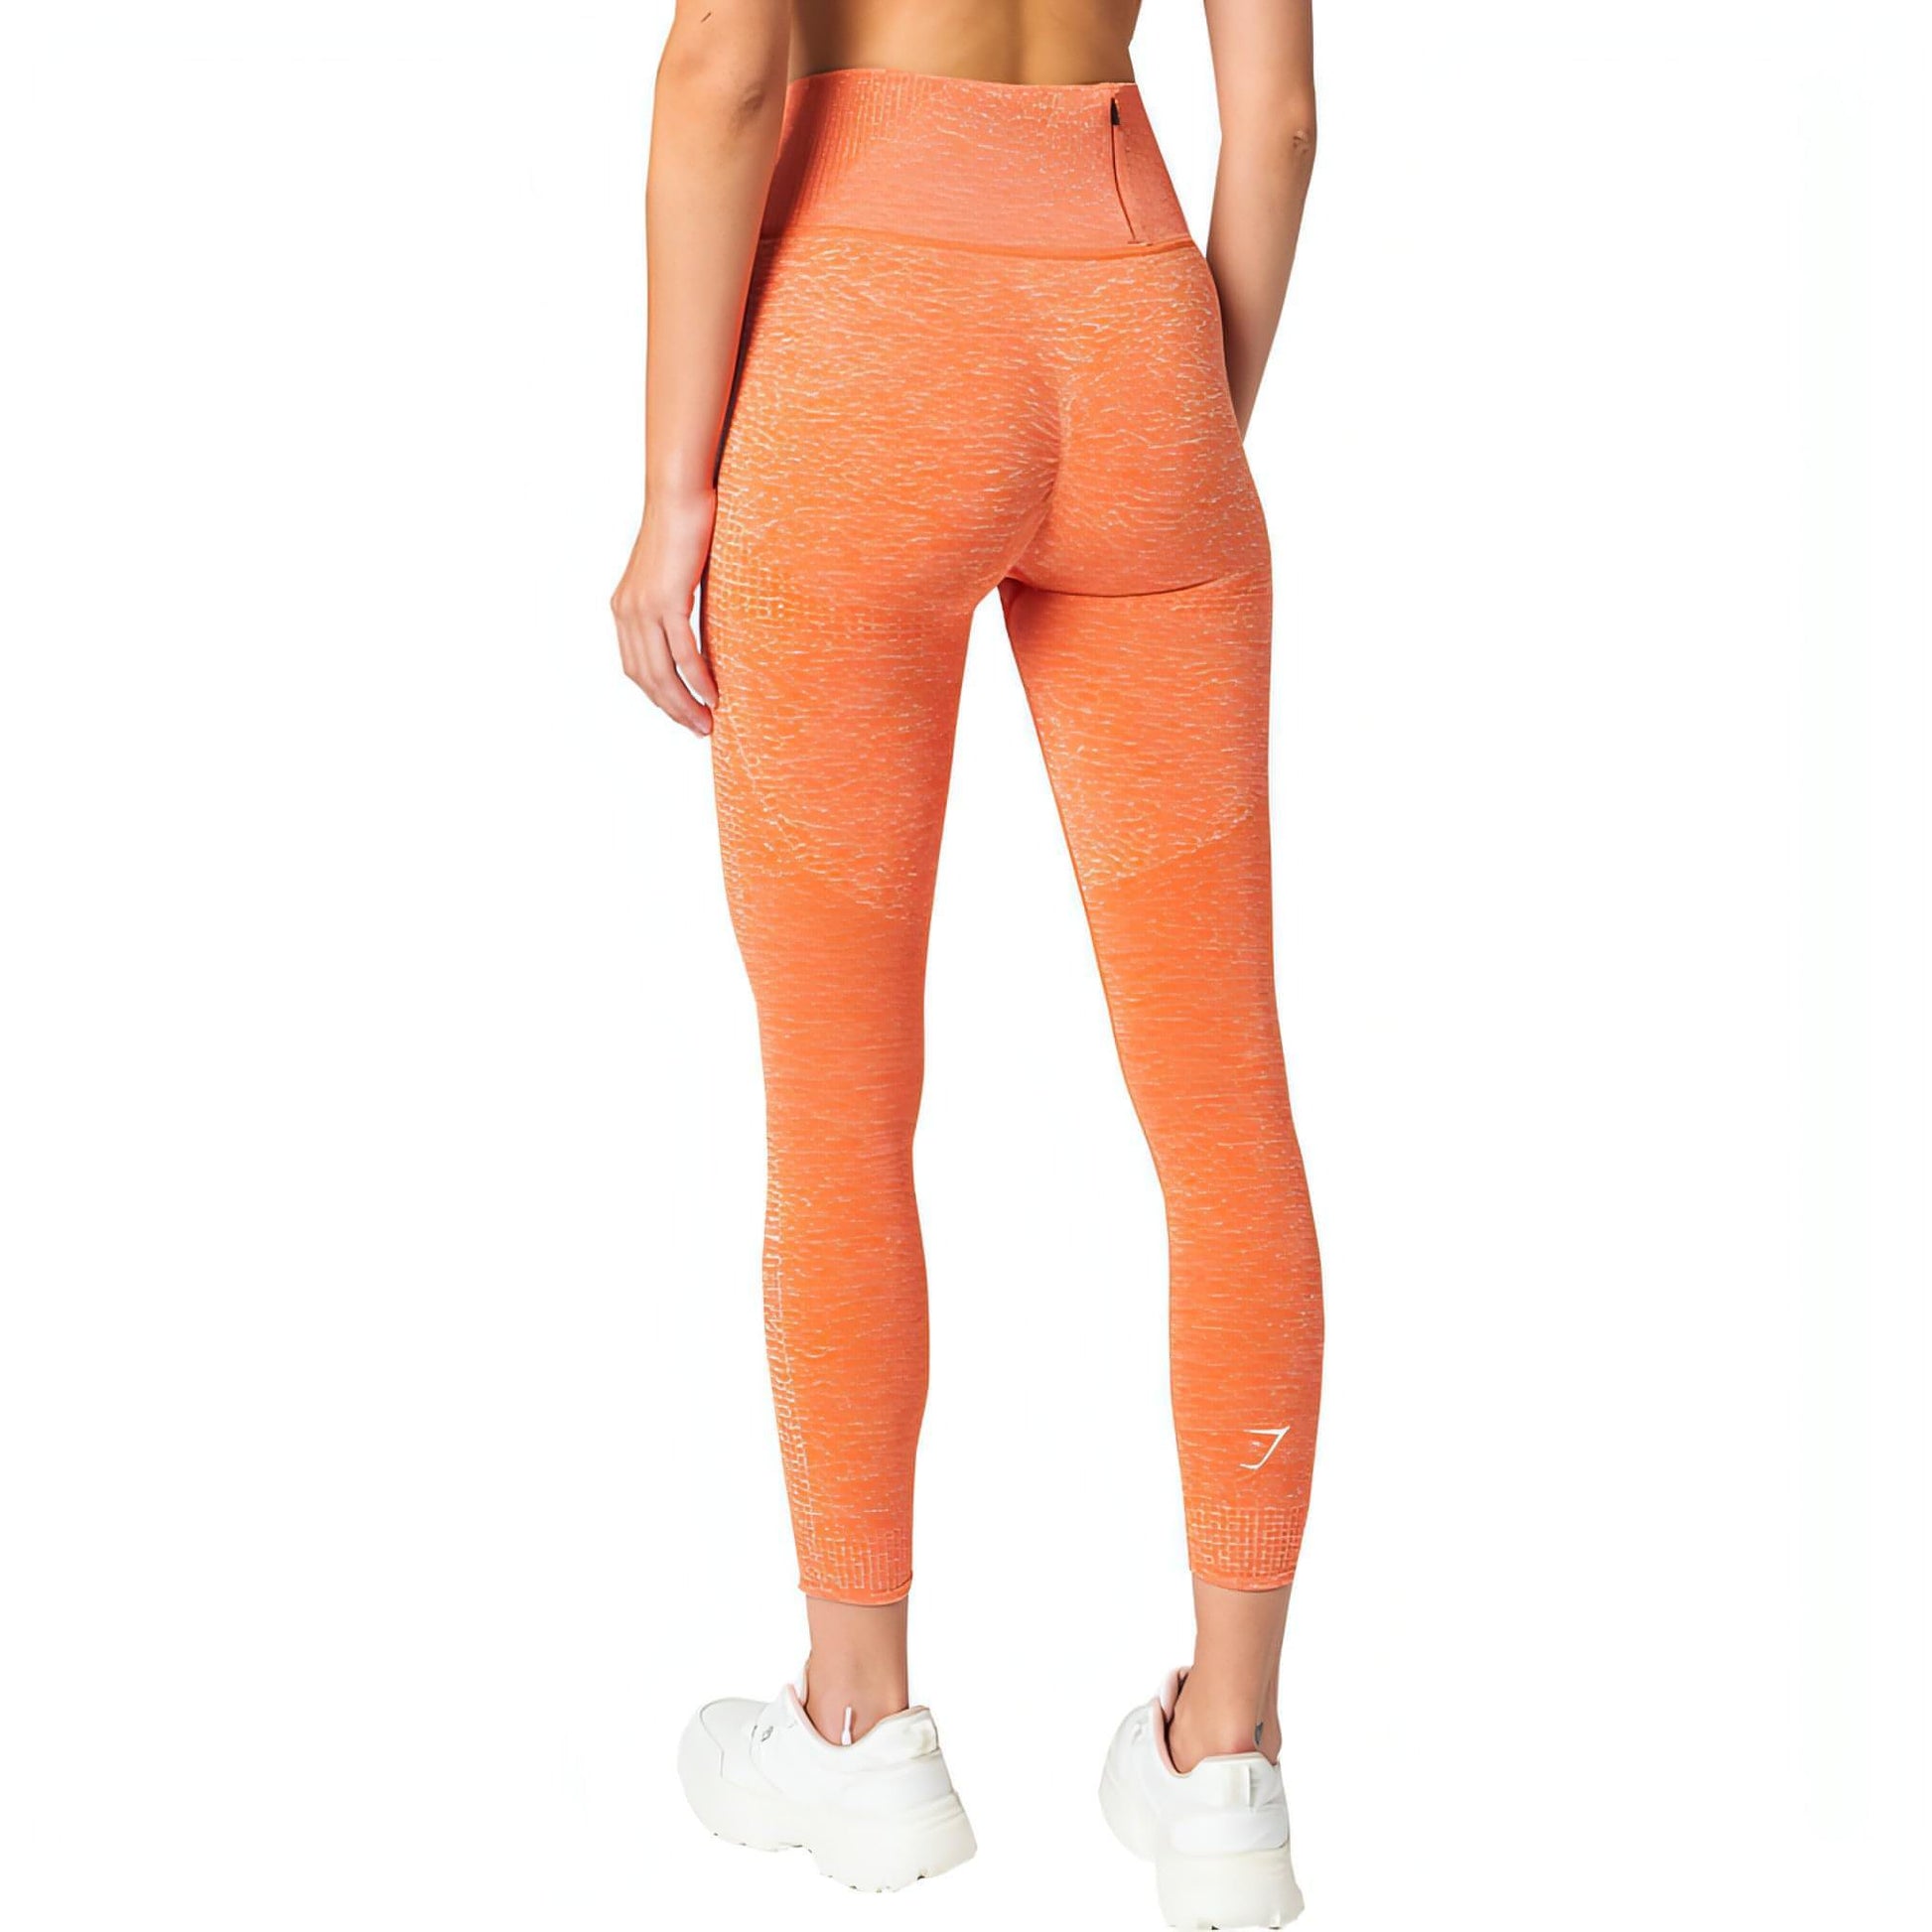 Buy Gymshark women sportswear fit vital rise leggings dark orange Online